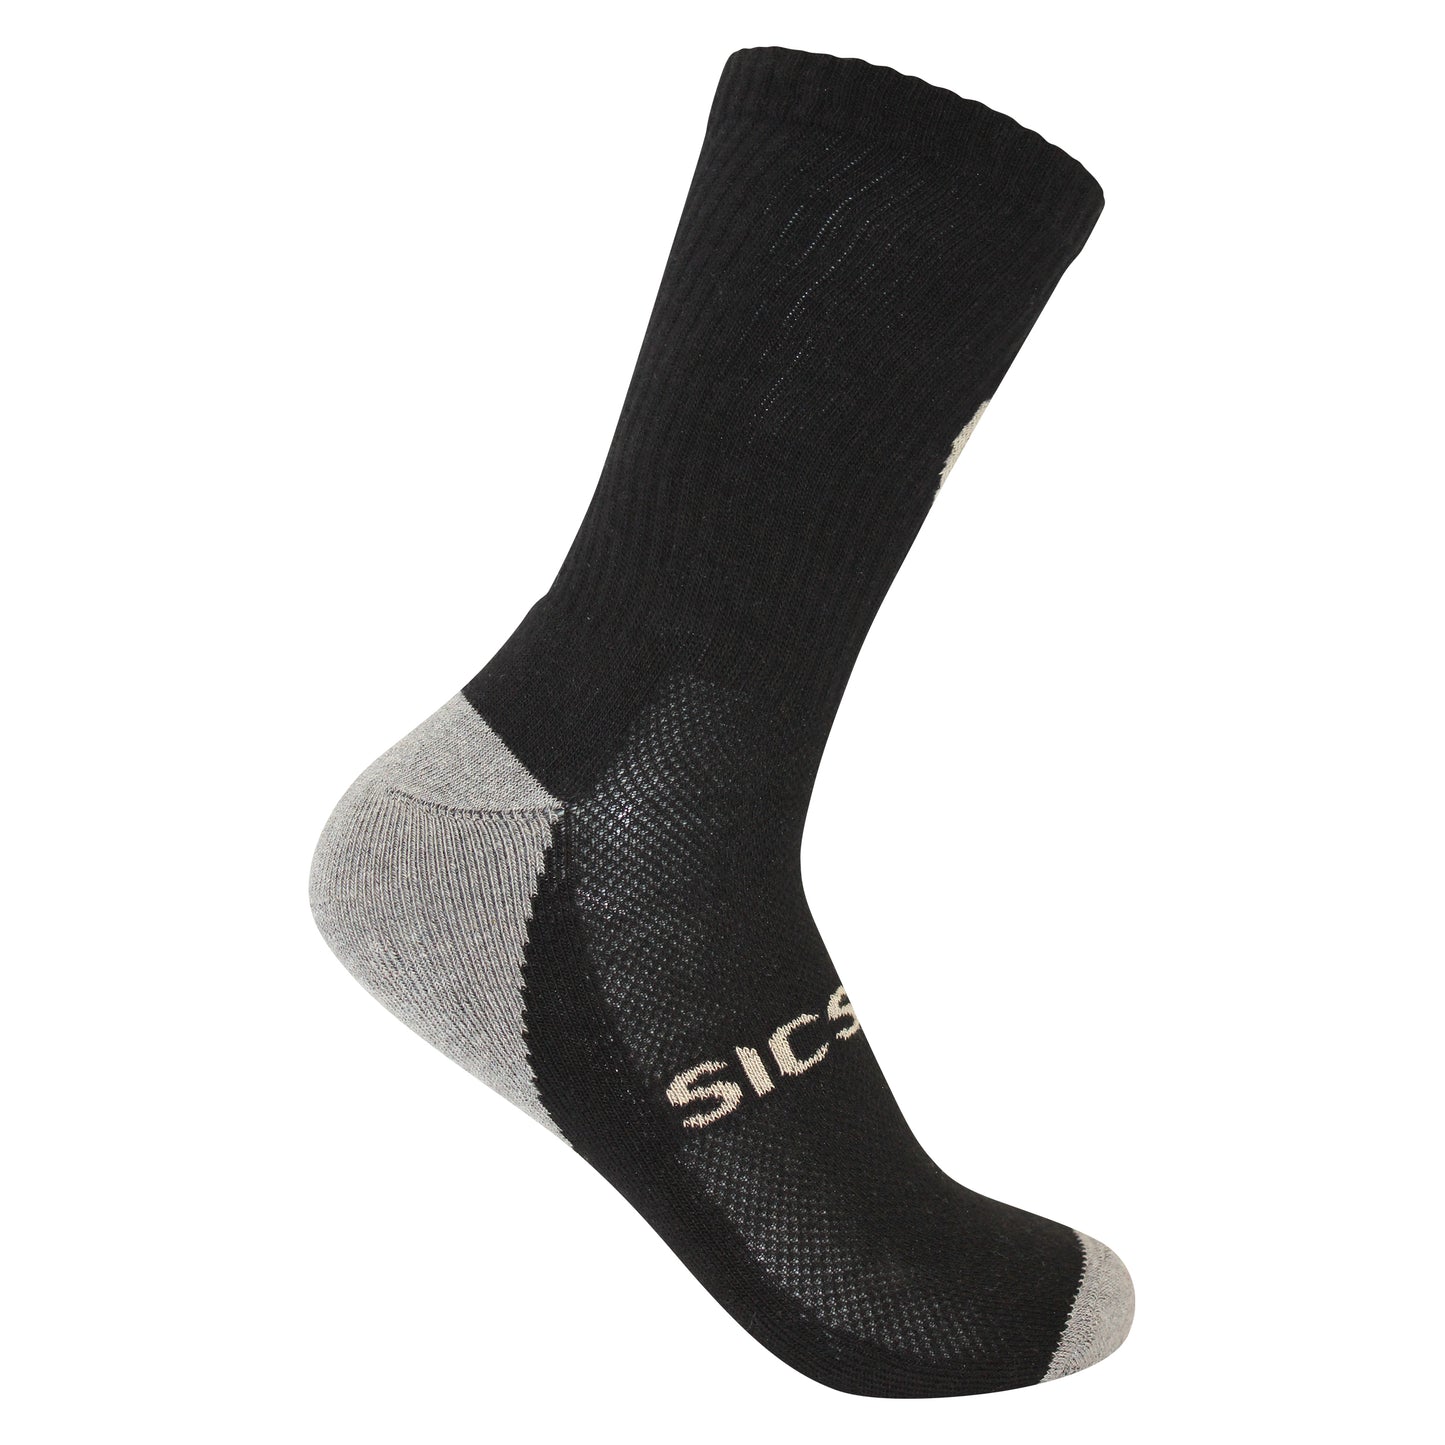 Sicsock - Everyday Max Cushion Crew Socks Black/Beige